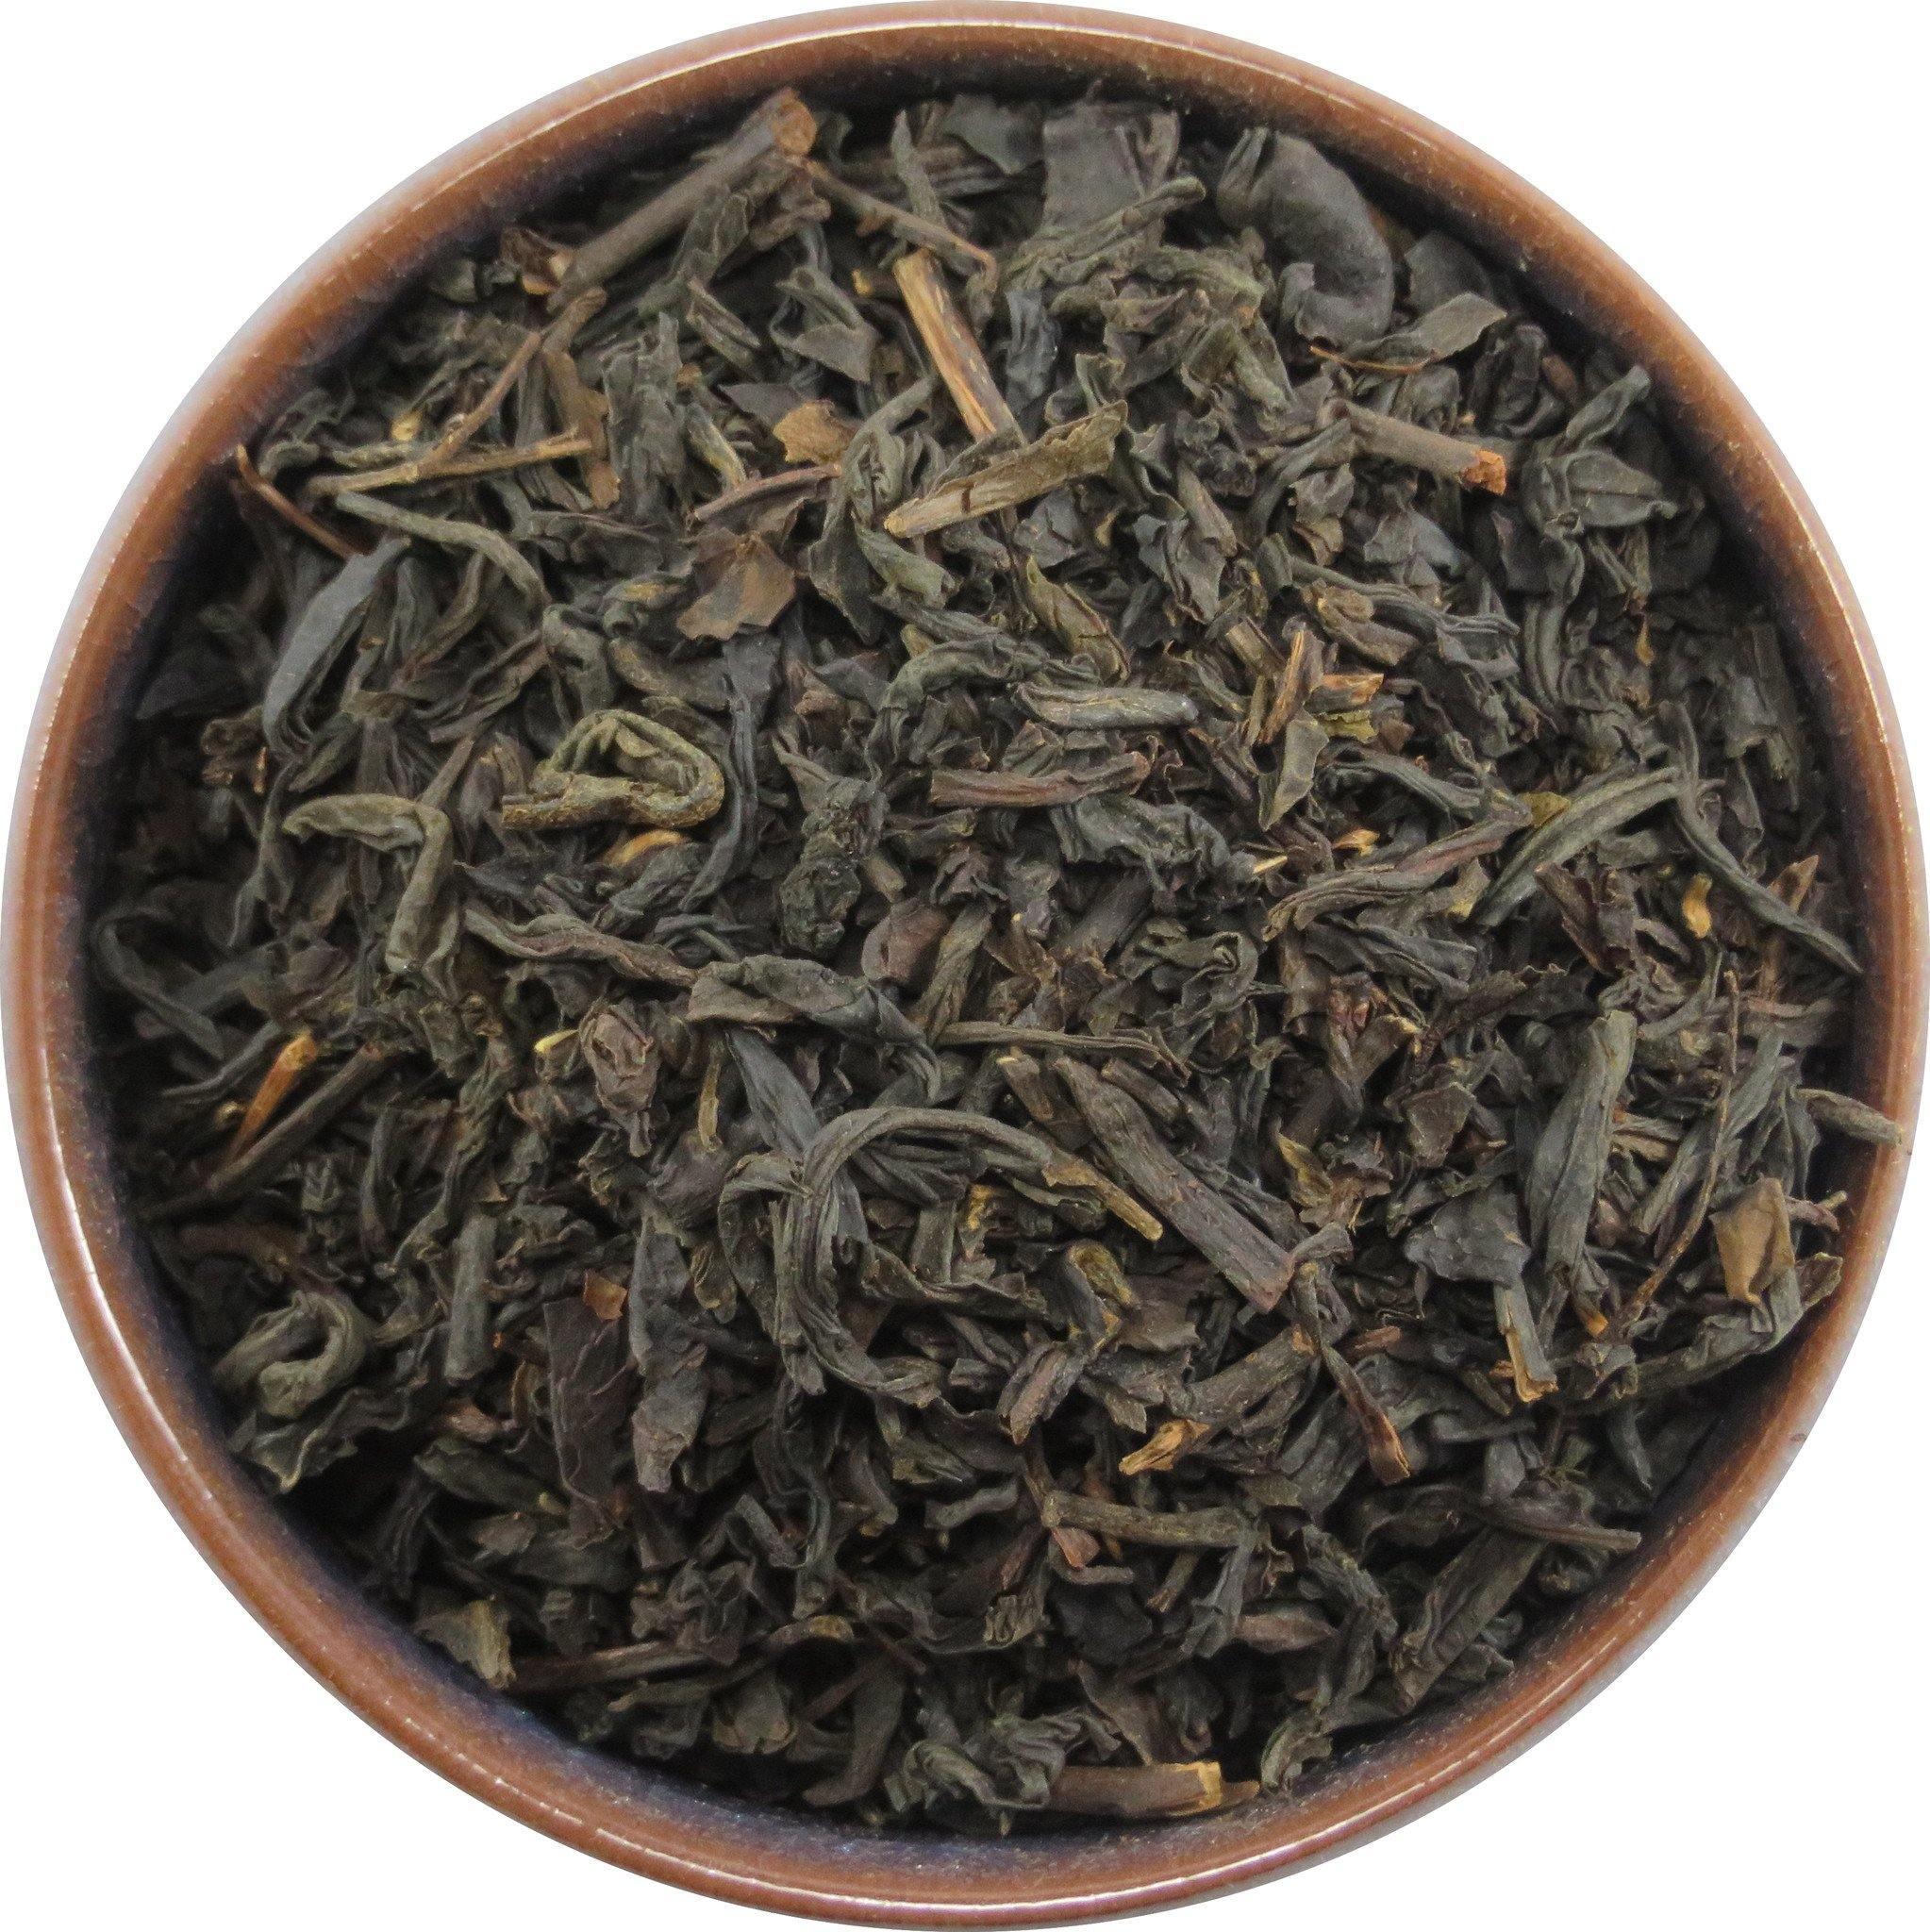 Smoky Russian Caravan Black Tea - BLACK - Teaura Tea | Online Tea Store